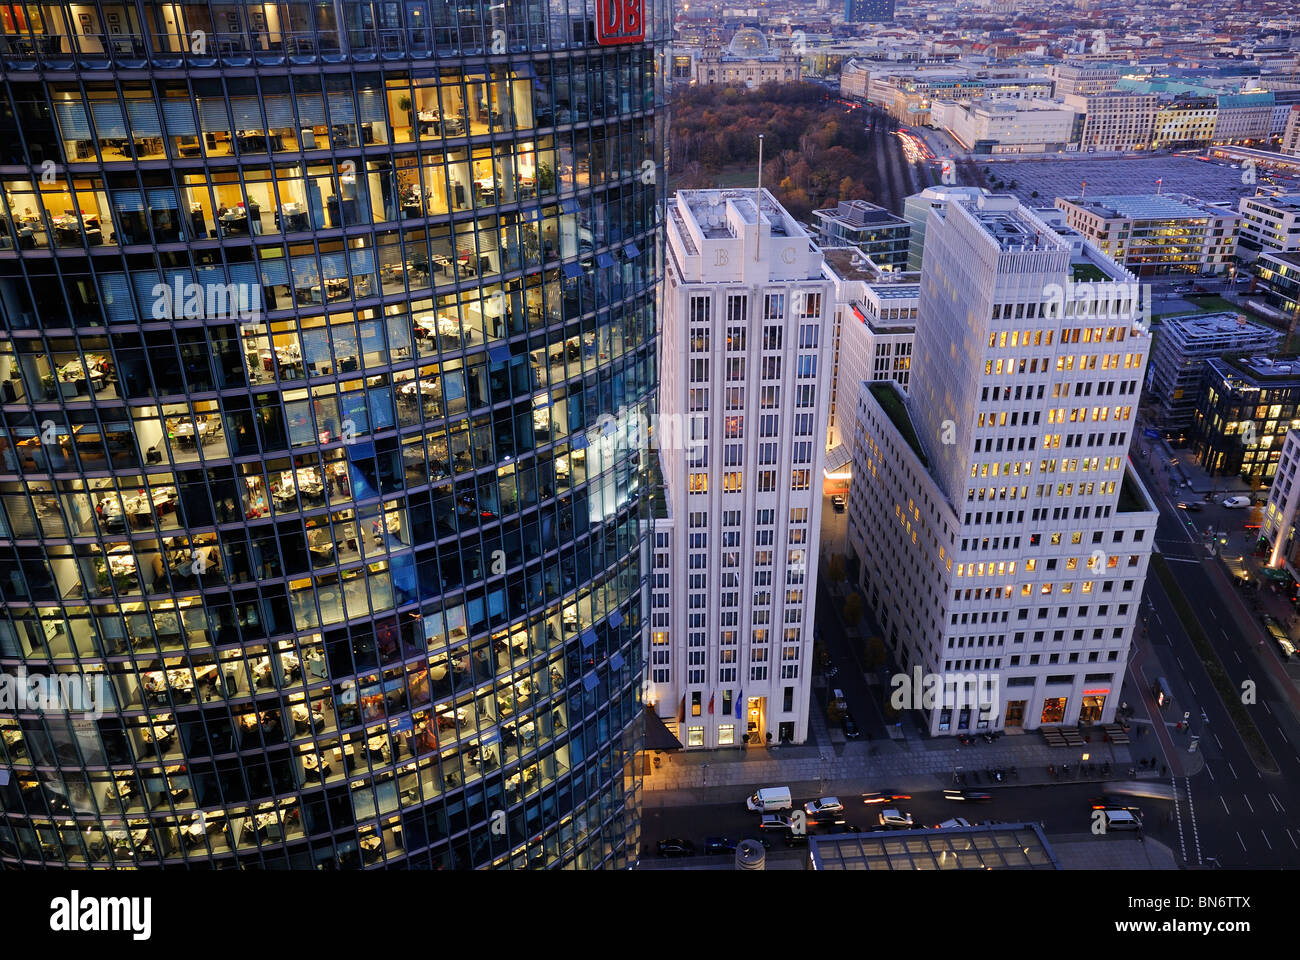 La Potsdamer Platz avec Deutsche Bahn Tower, Beisheim Center à l'Hôtel Ritz Carlton et Holocaust Memorial, Berlin, Allemagne Banque D'Images